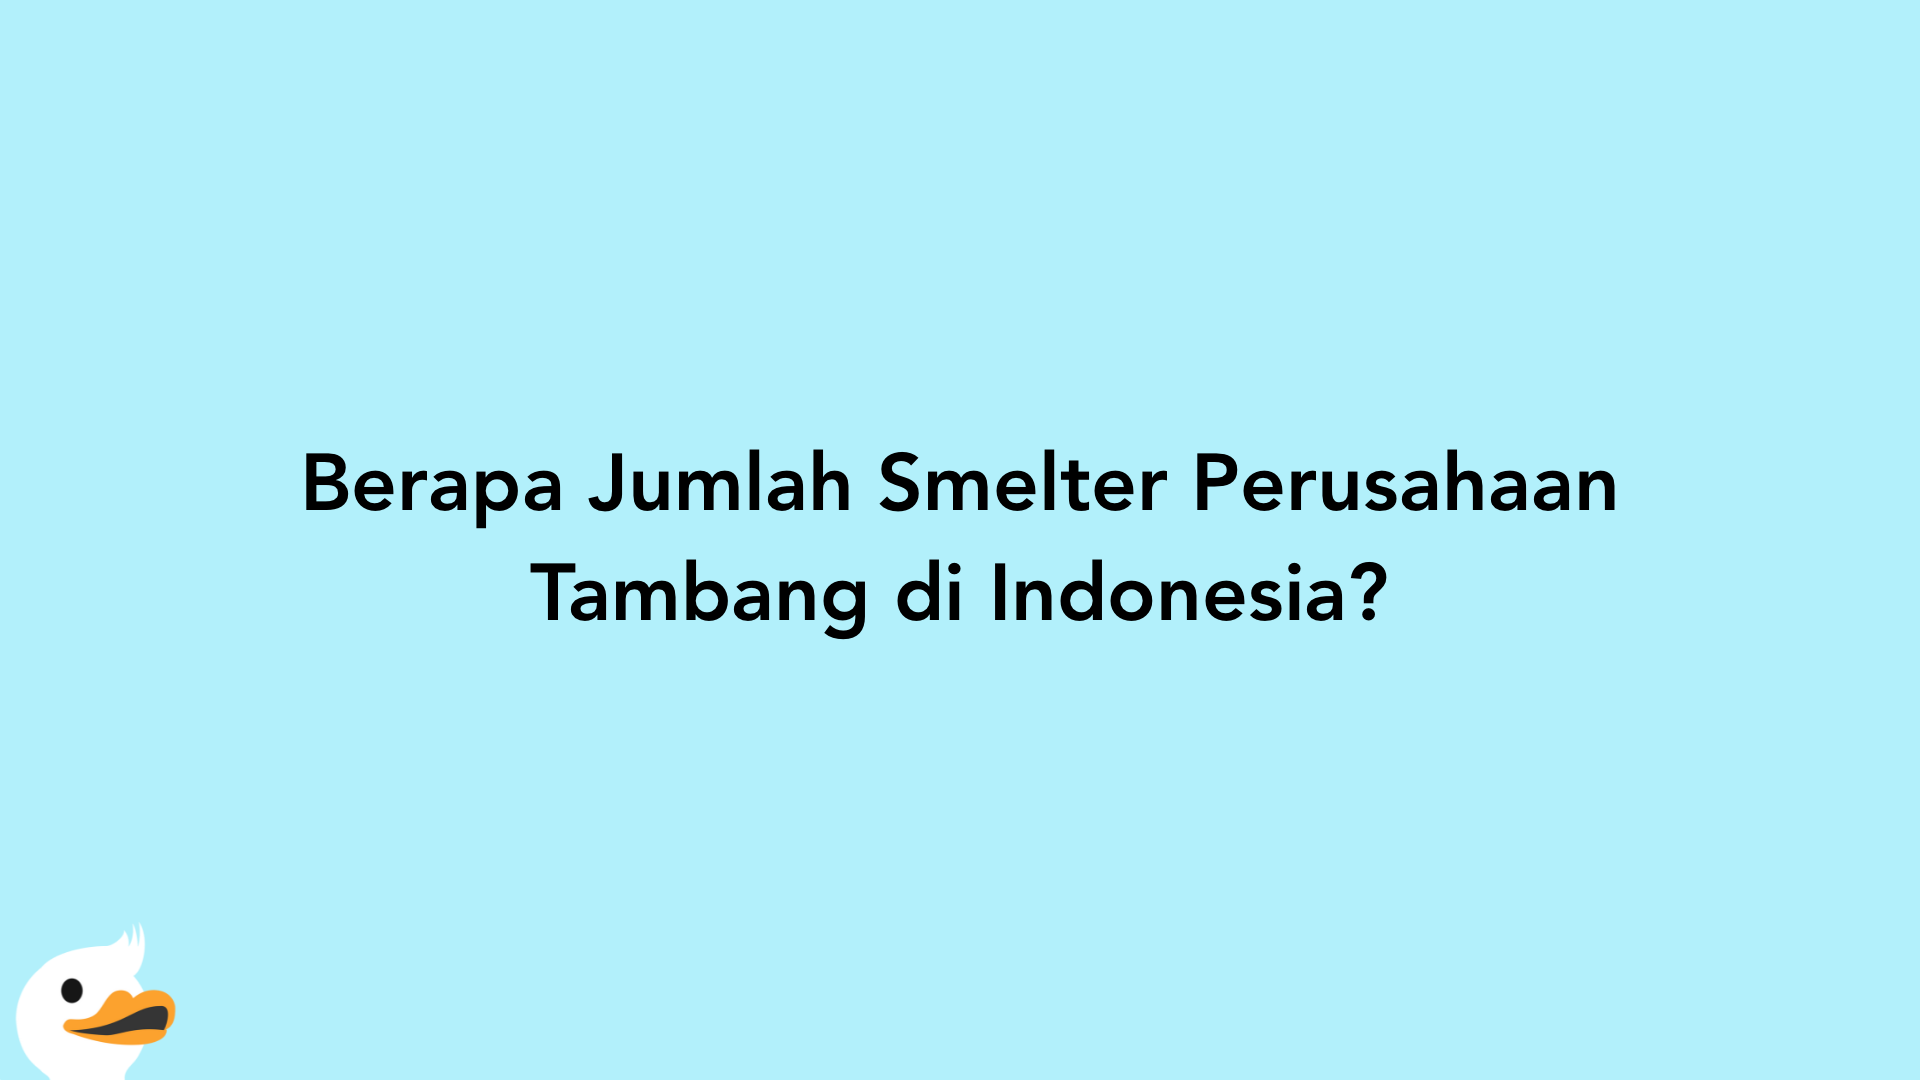 Berapa Jumlah Smelter Perusahaan Tambang di Indonesia?